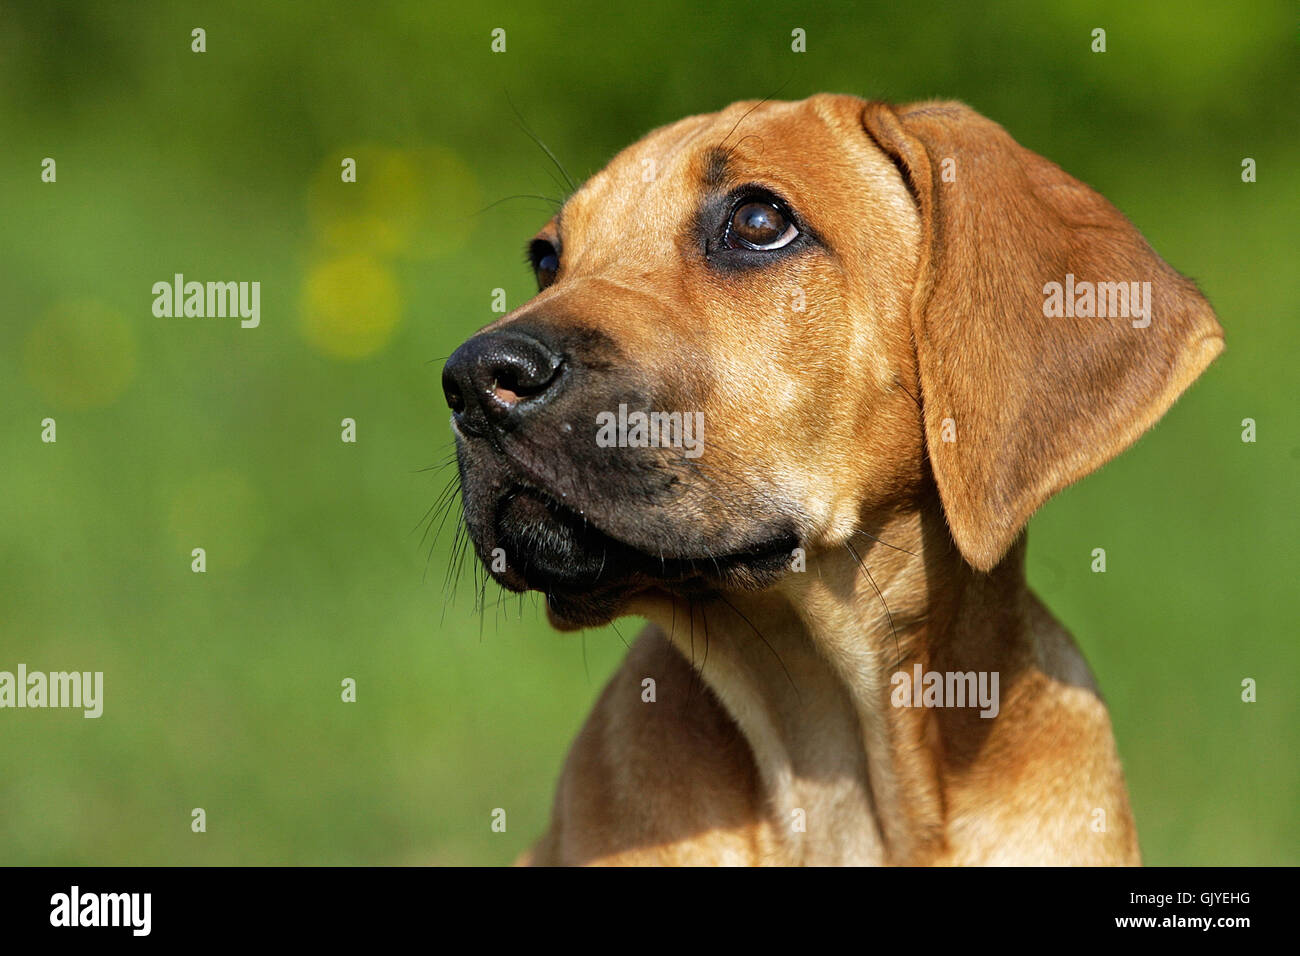 animal portrait dog Stock Photo